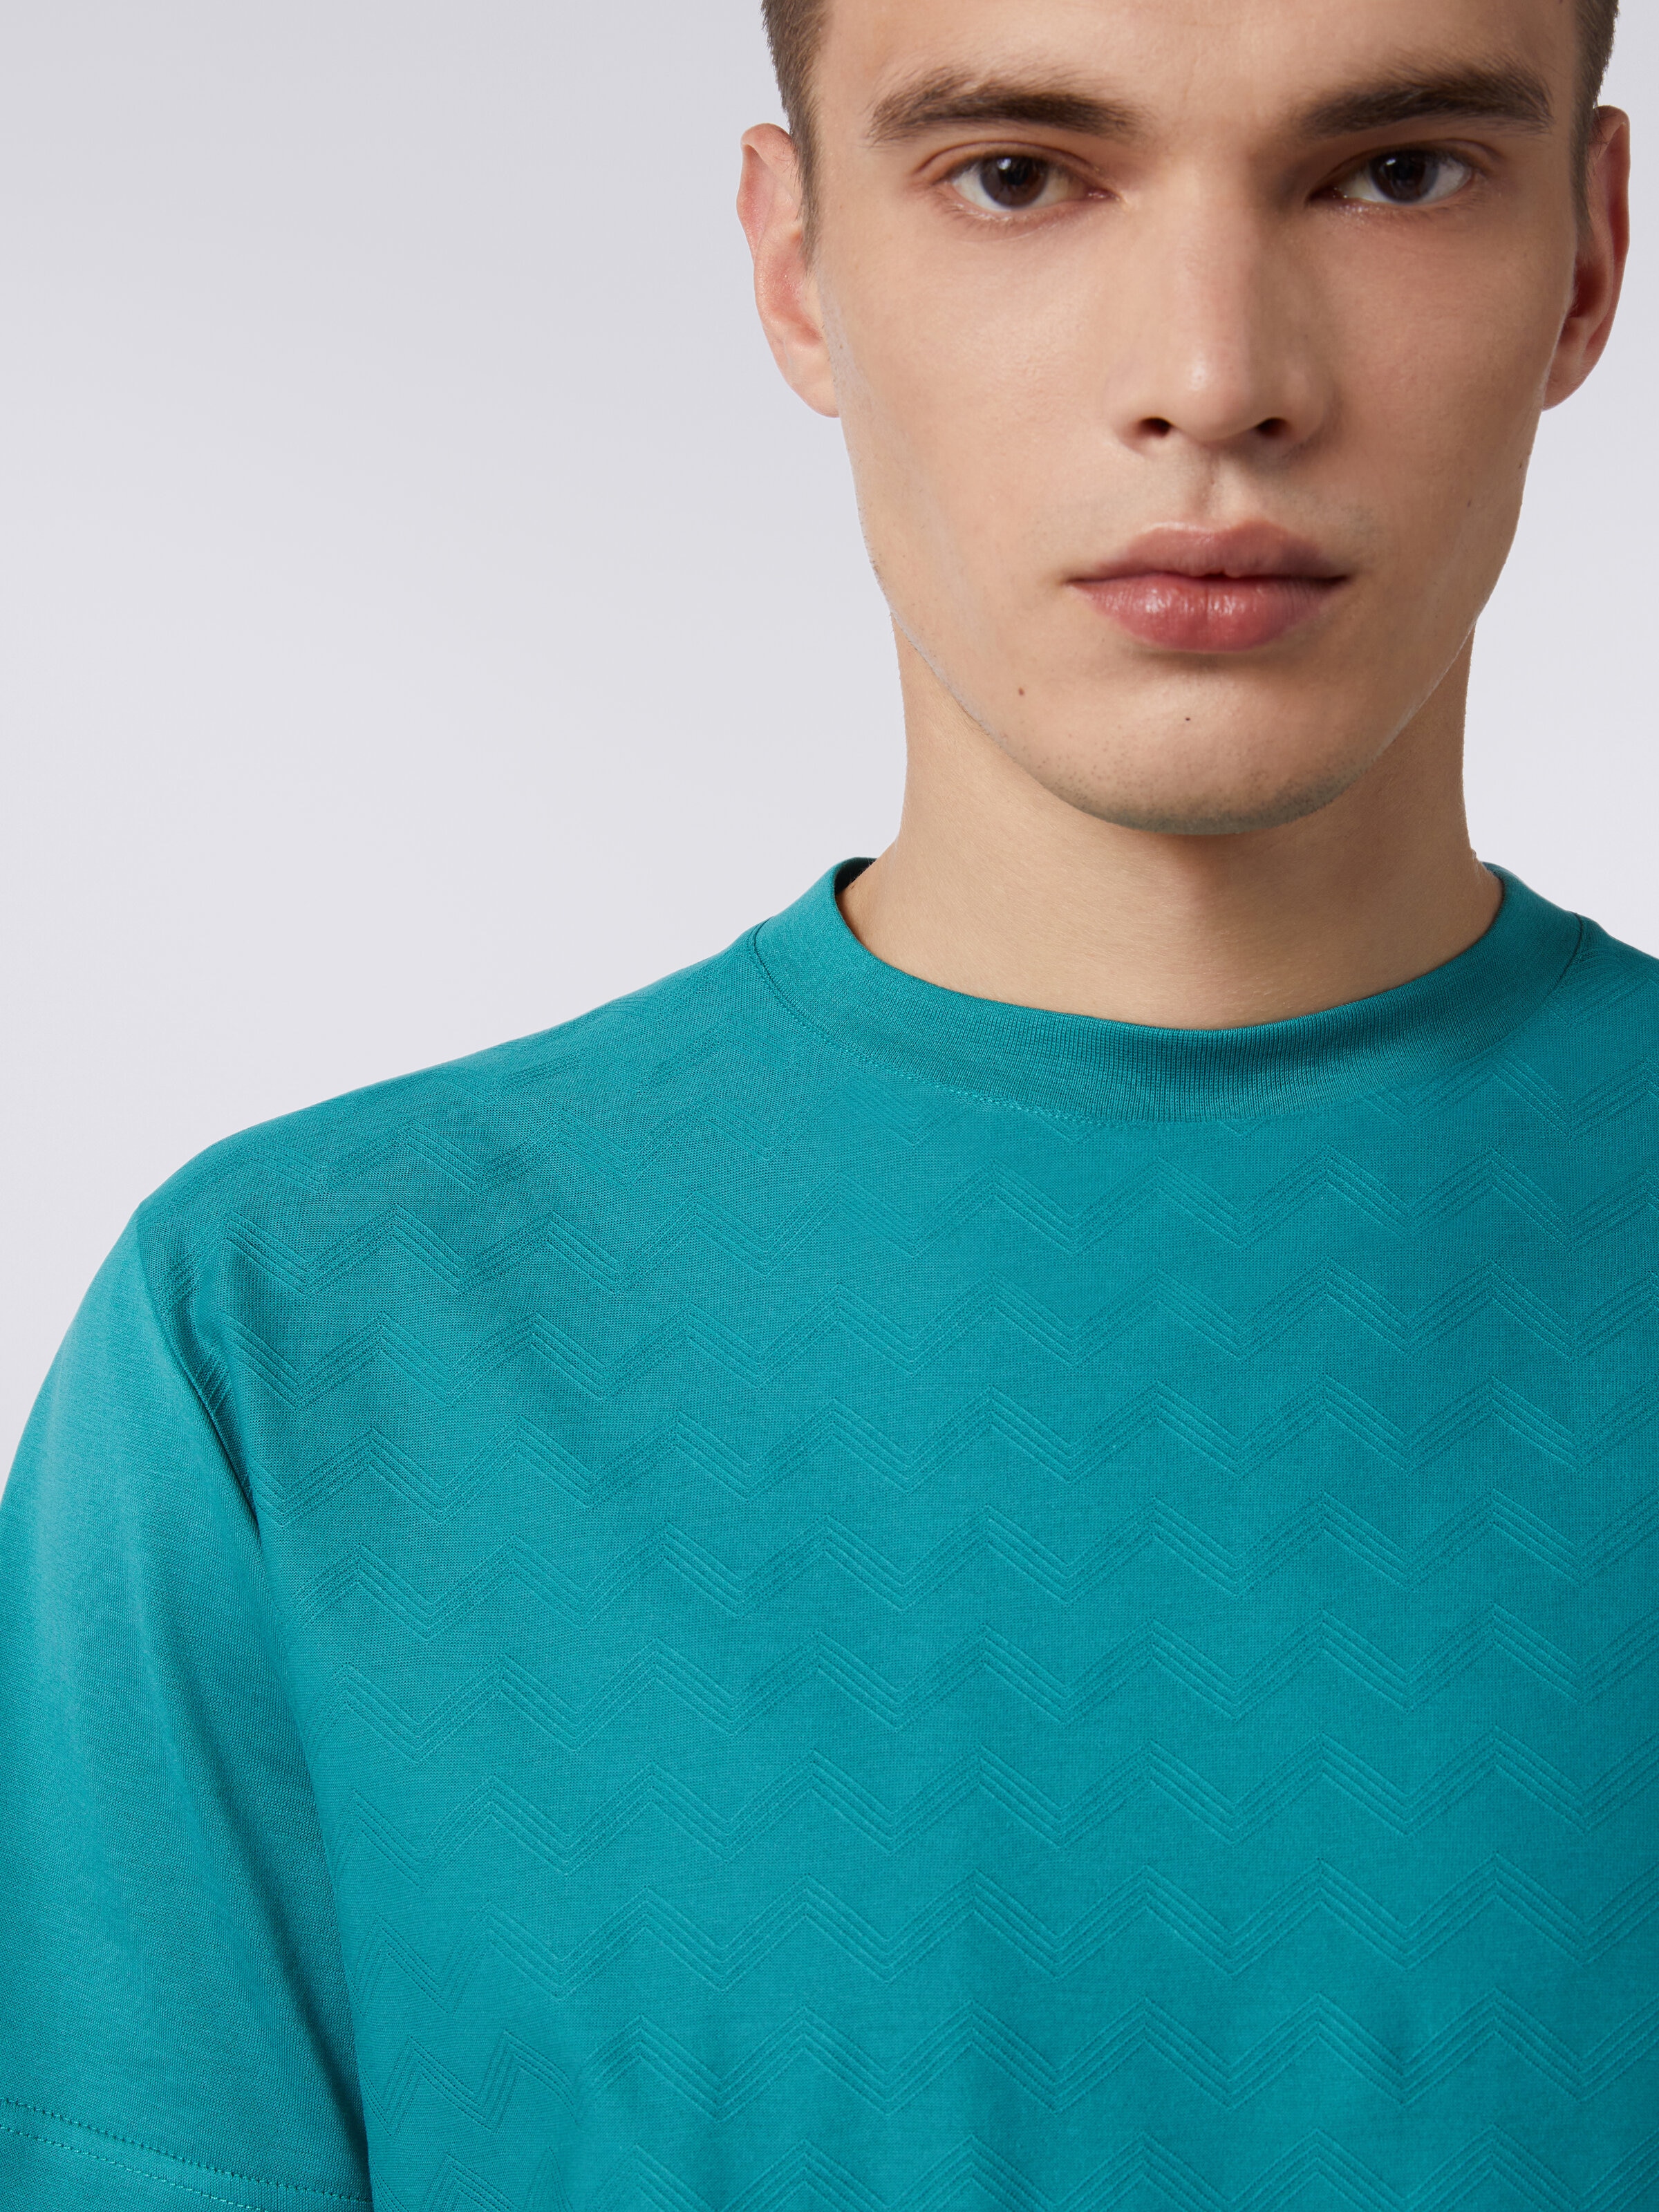 Kurzärmeliges Baumwoll-T-Shirt mit Zickzackmuster, Grün  - 4